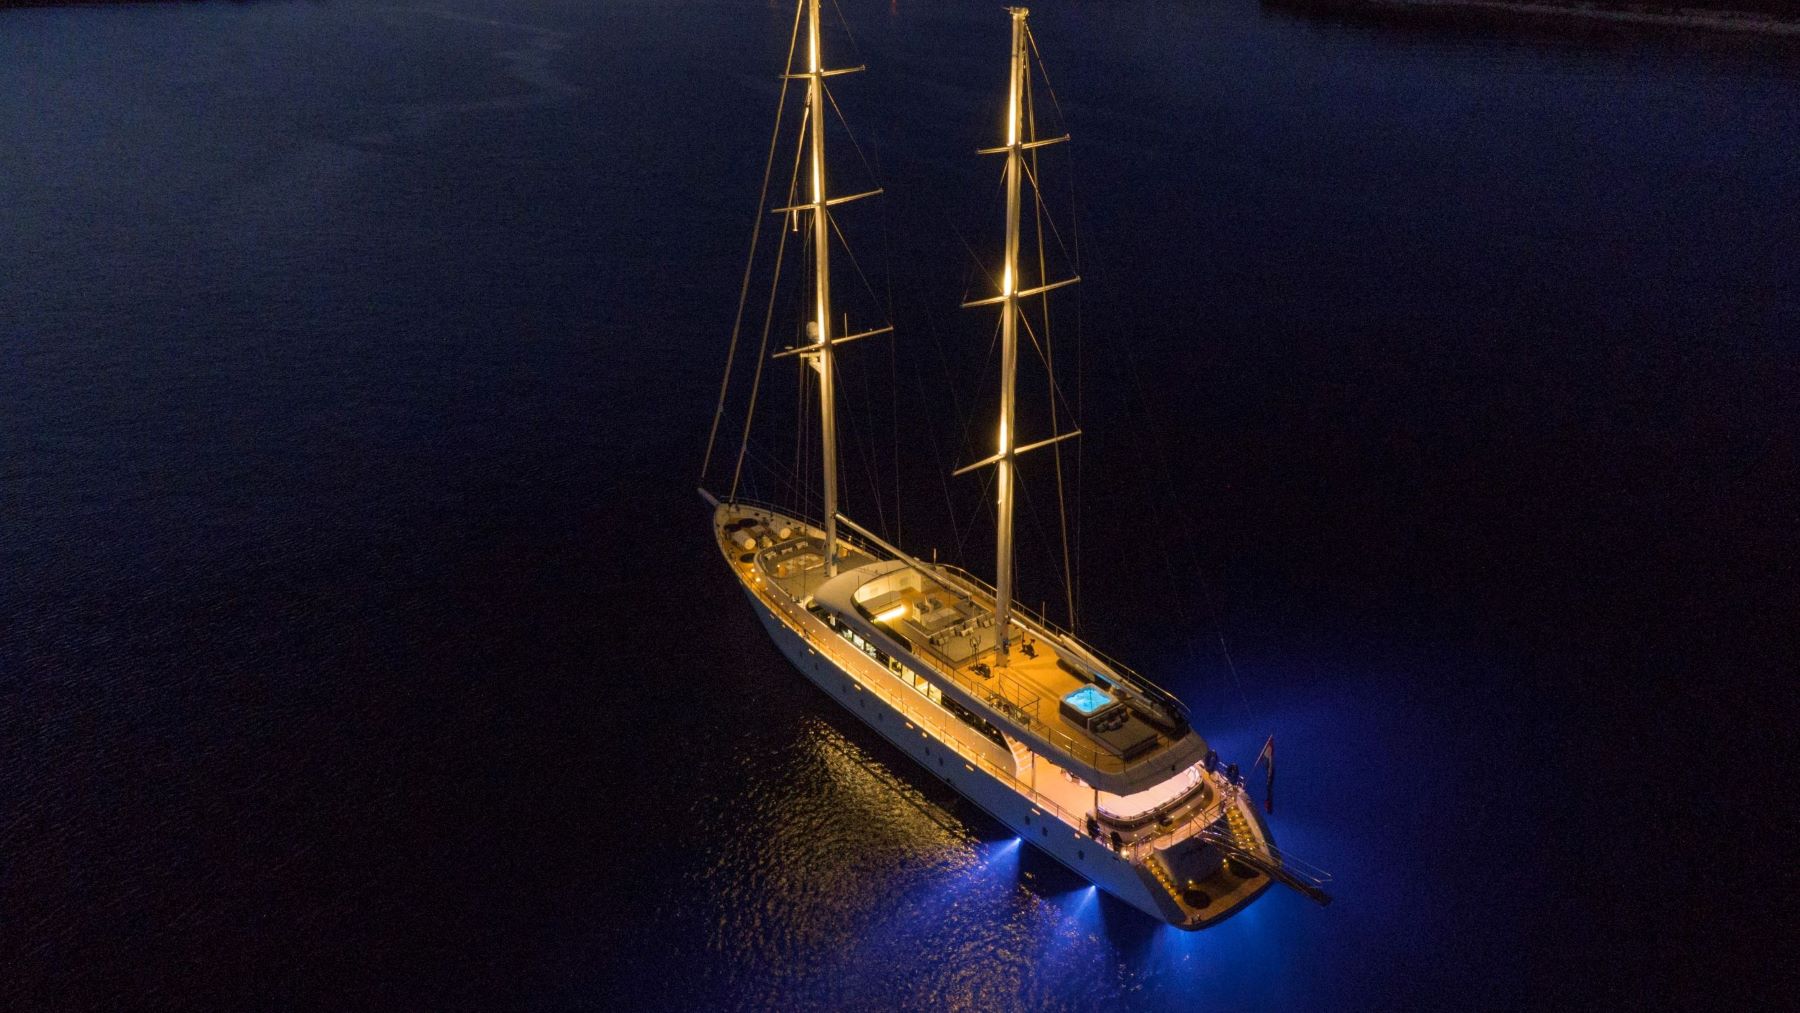 Aurum Sky sailing yacht - with lighting turned on anchored in the Adriatic Sea near the coast of Croatia - night shot.